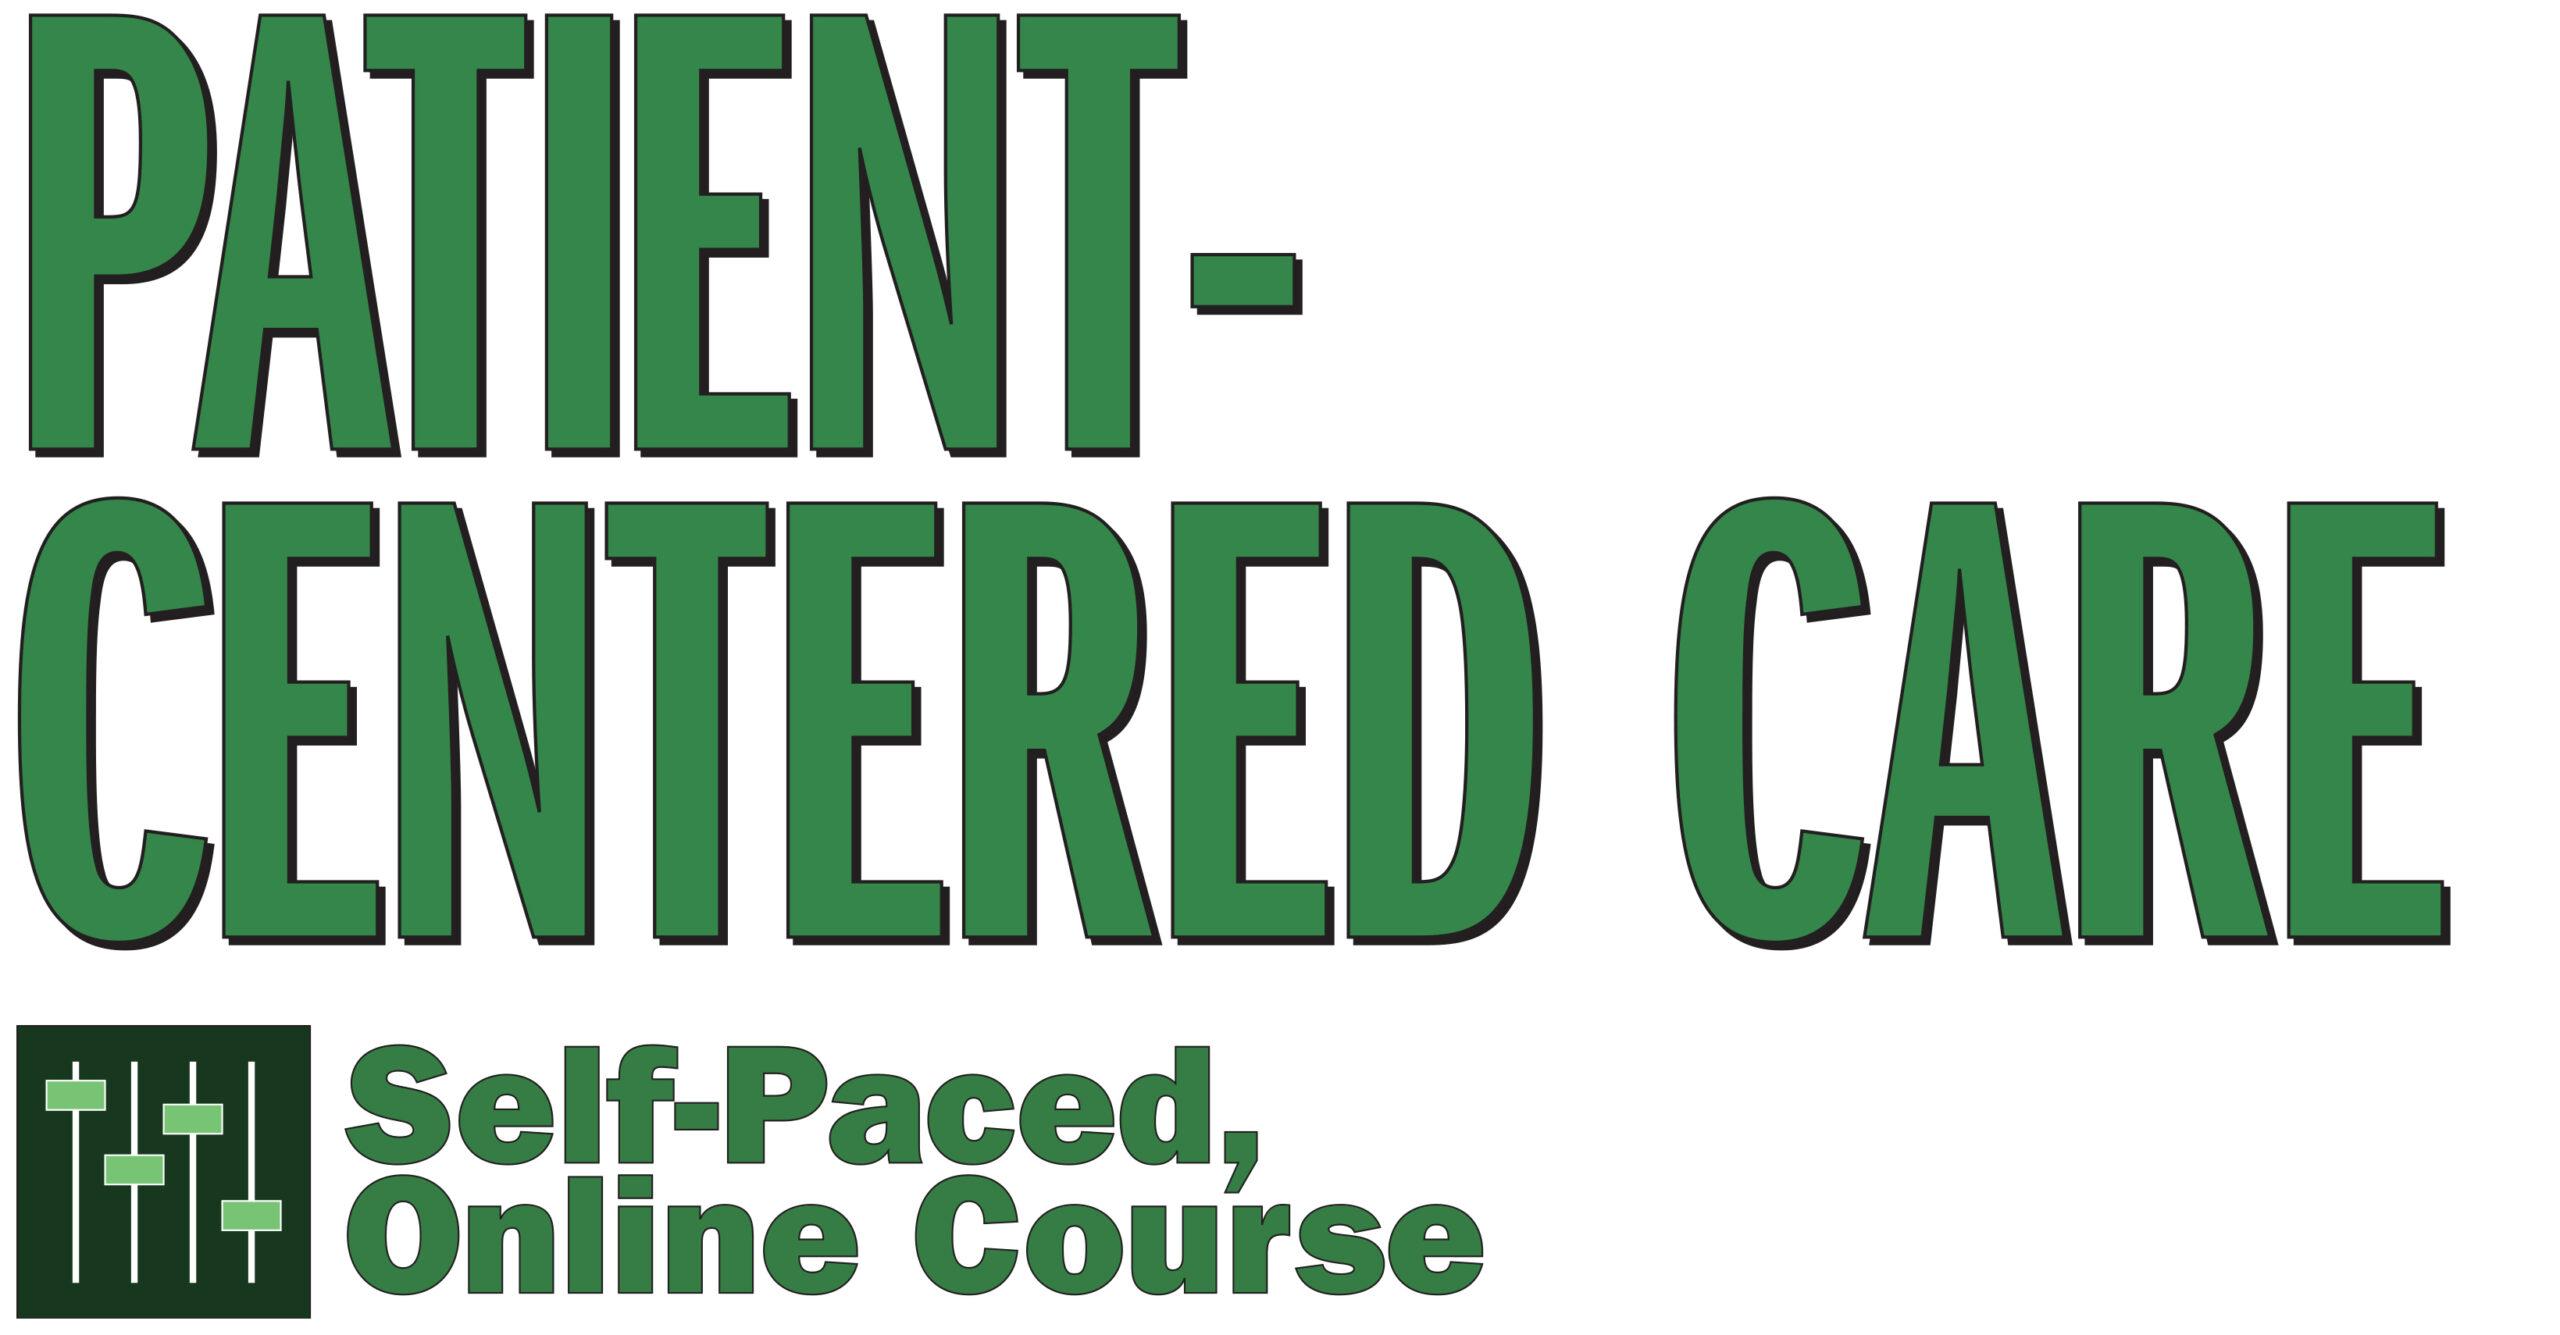 Patient Centered Care Logo